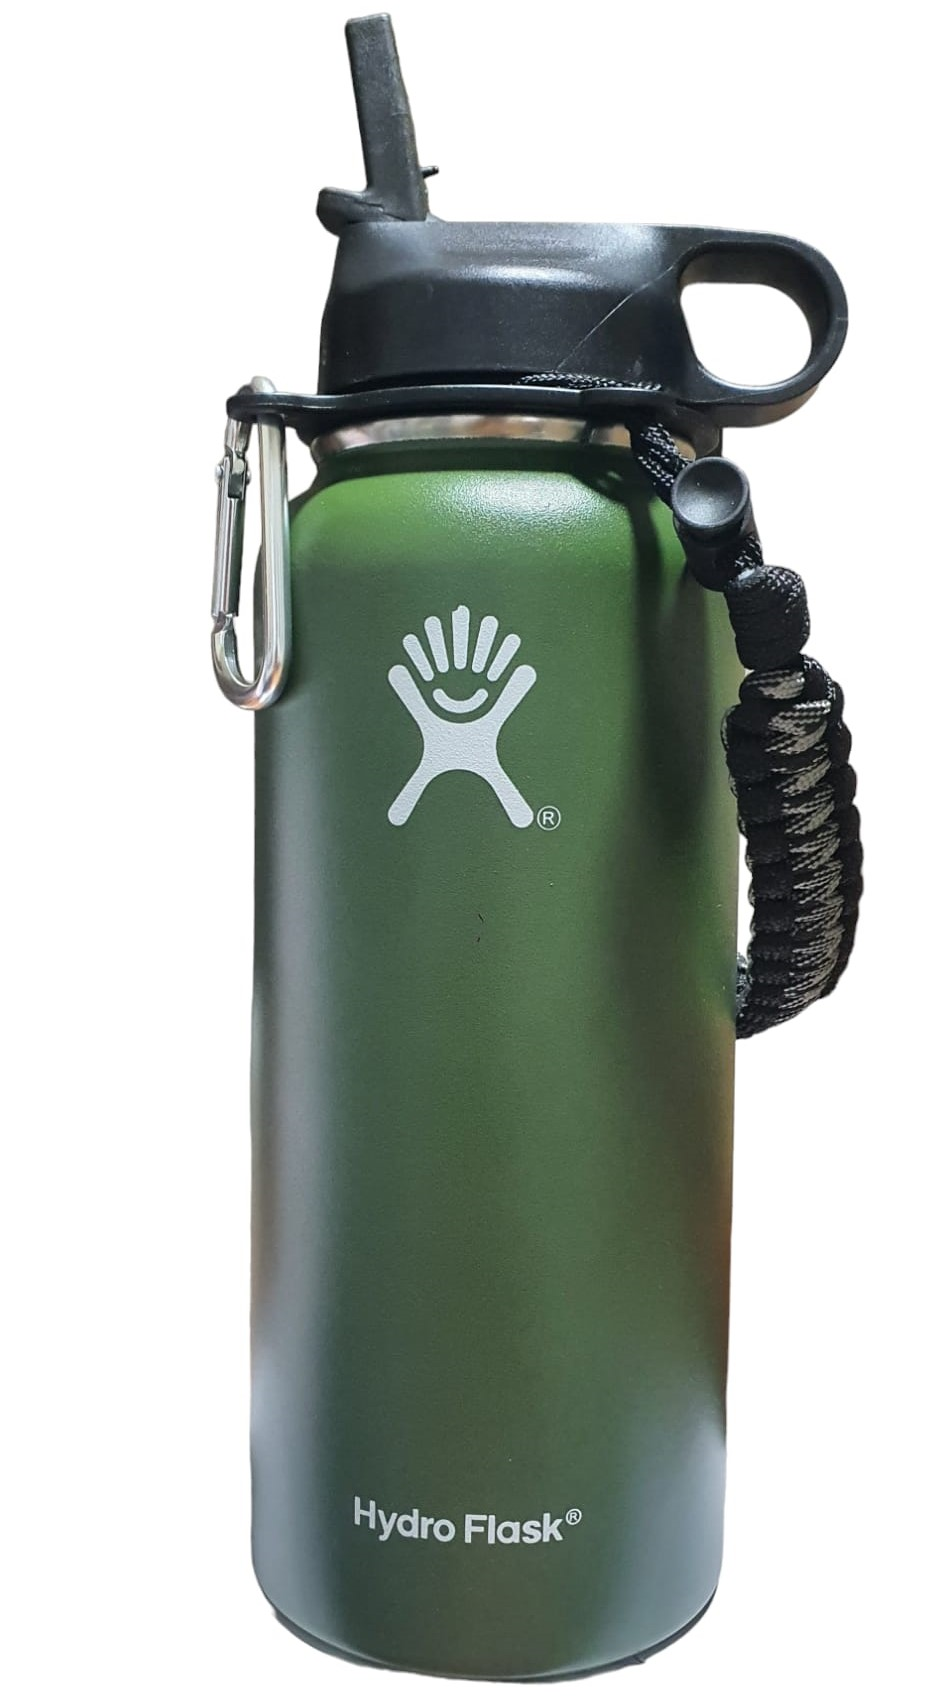 Sticla de apa Hydro Flask din otel inoxidabil si izolata in vid cu capac, sistem de prindere si pai 946 ml, verde army